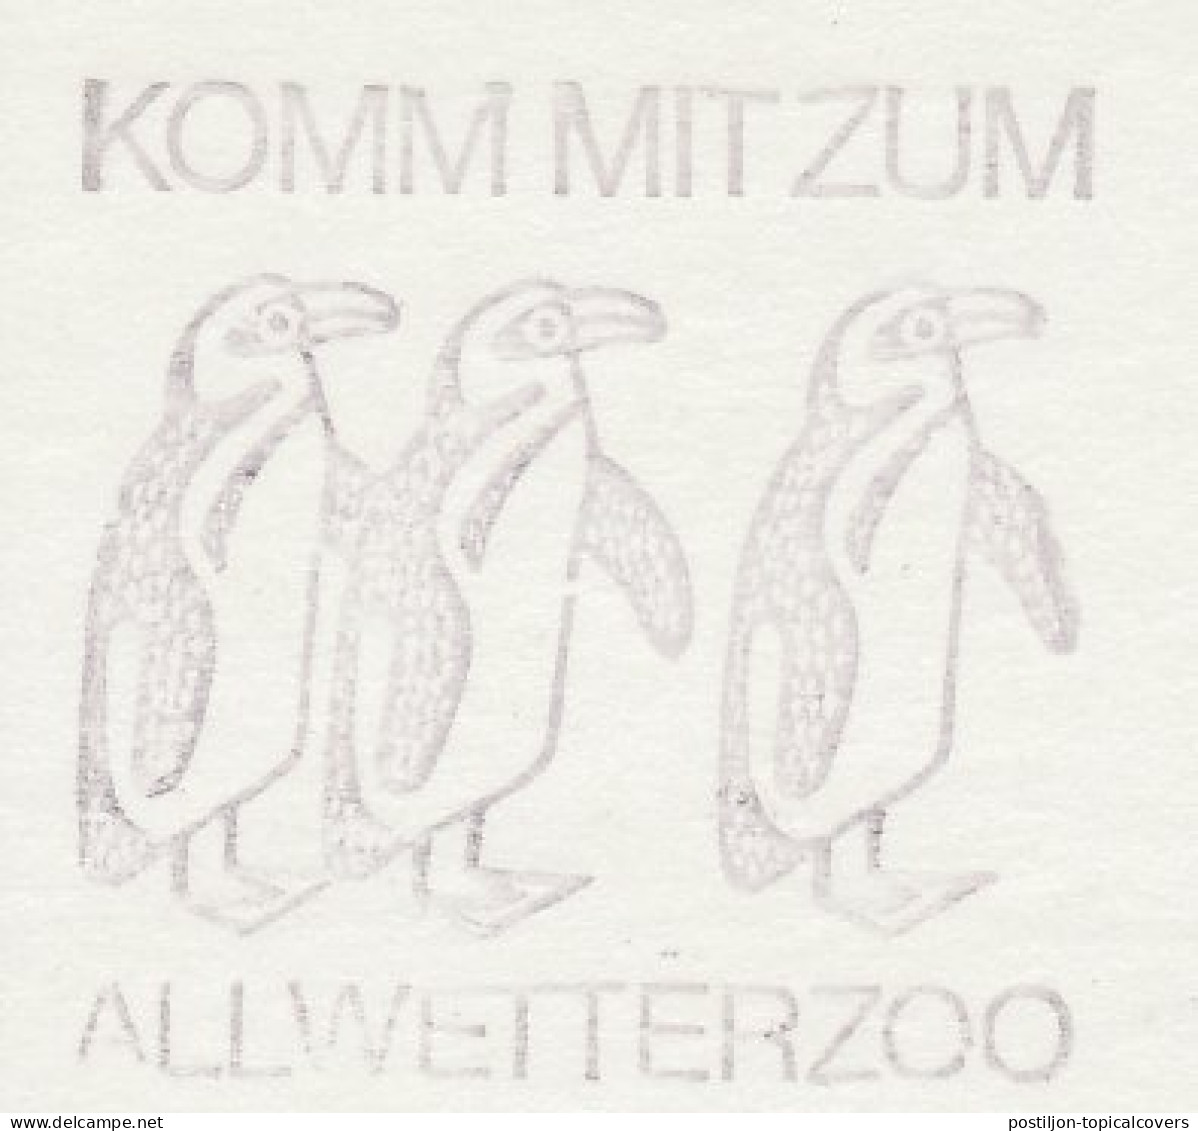 Postcard / Postmark Germany Bird - Penguin - Zoo Munster - Spedizioni Artiche